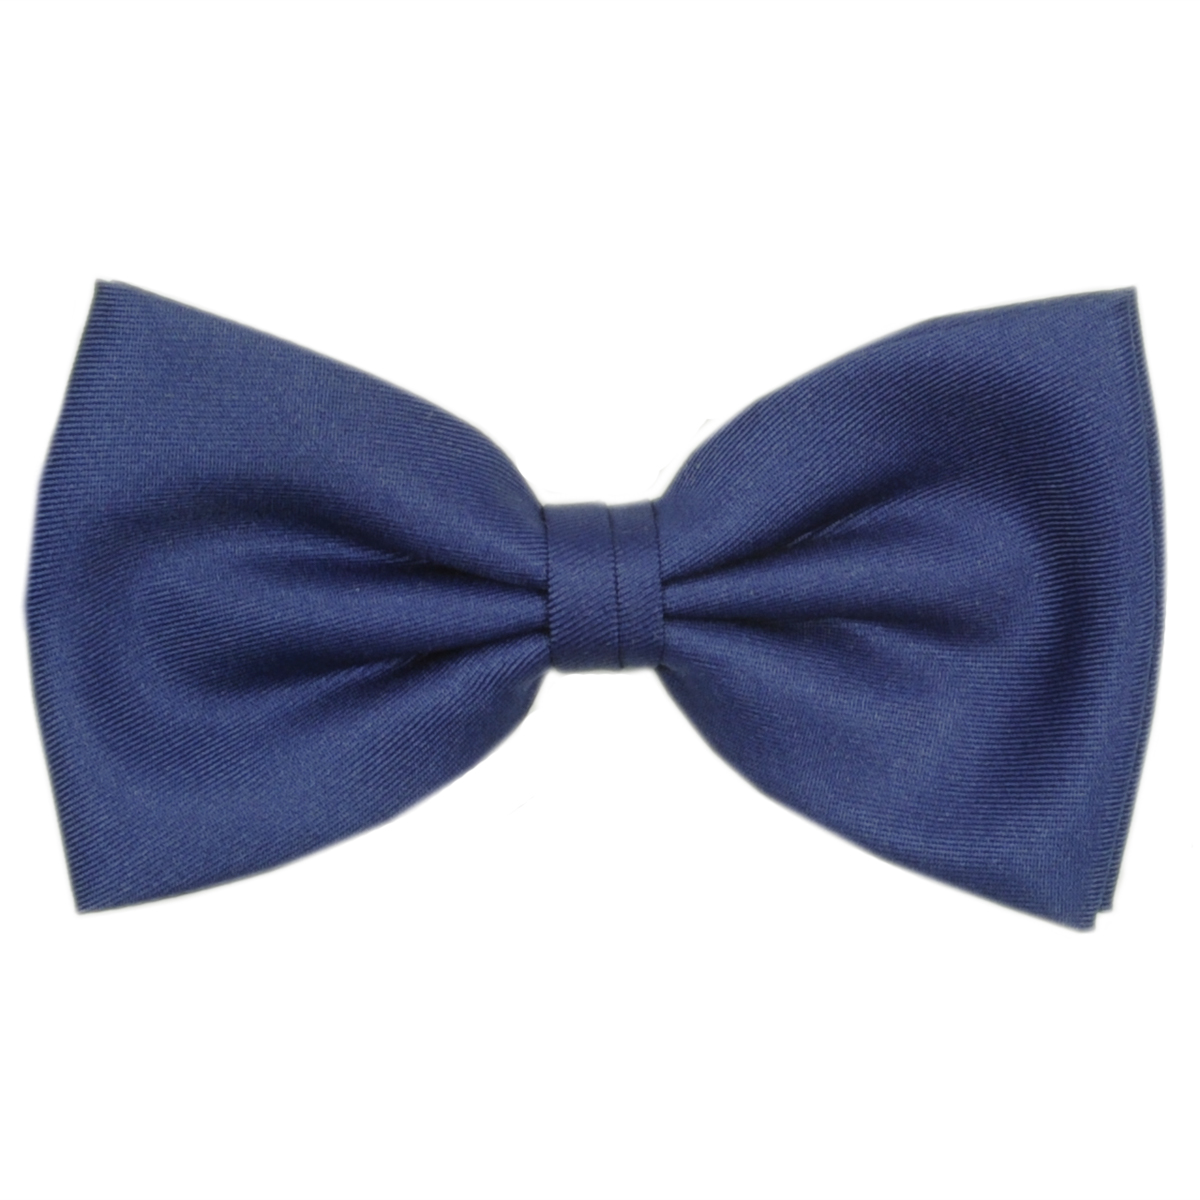 Bow tie navy blue - WE LOVE TIES - ClipArt Best - ClipArt Best